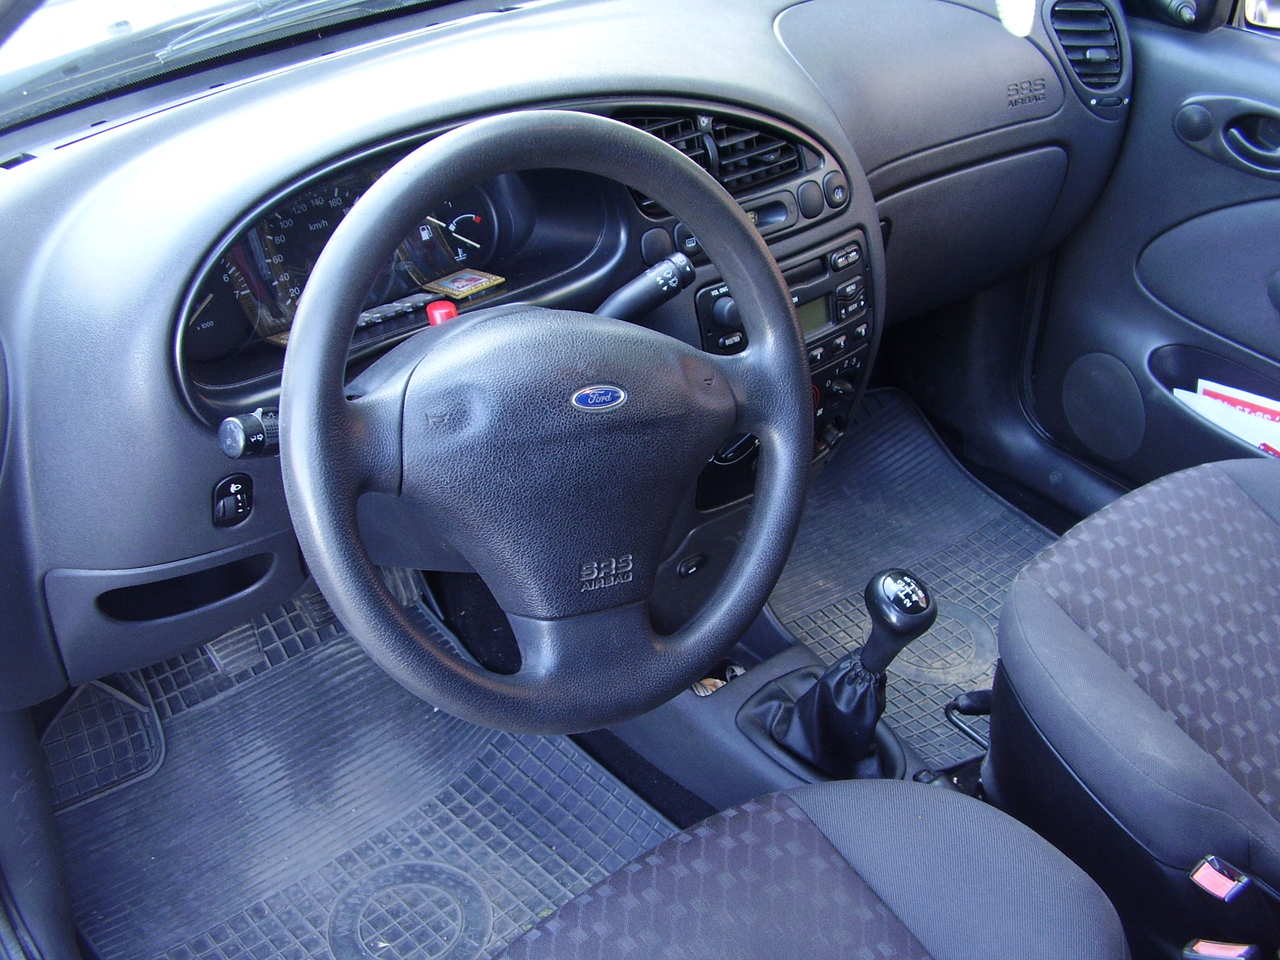 2001 Ford Fiesta specs, Engine size 1300cm3, Fuel type Gasoline, Drive